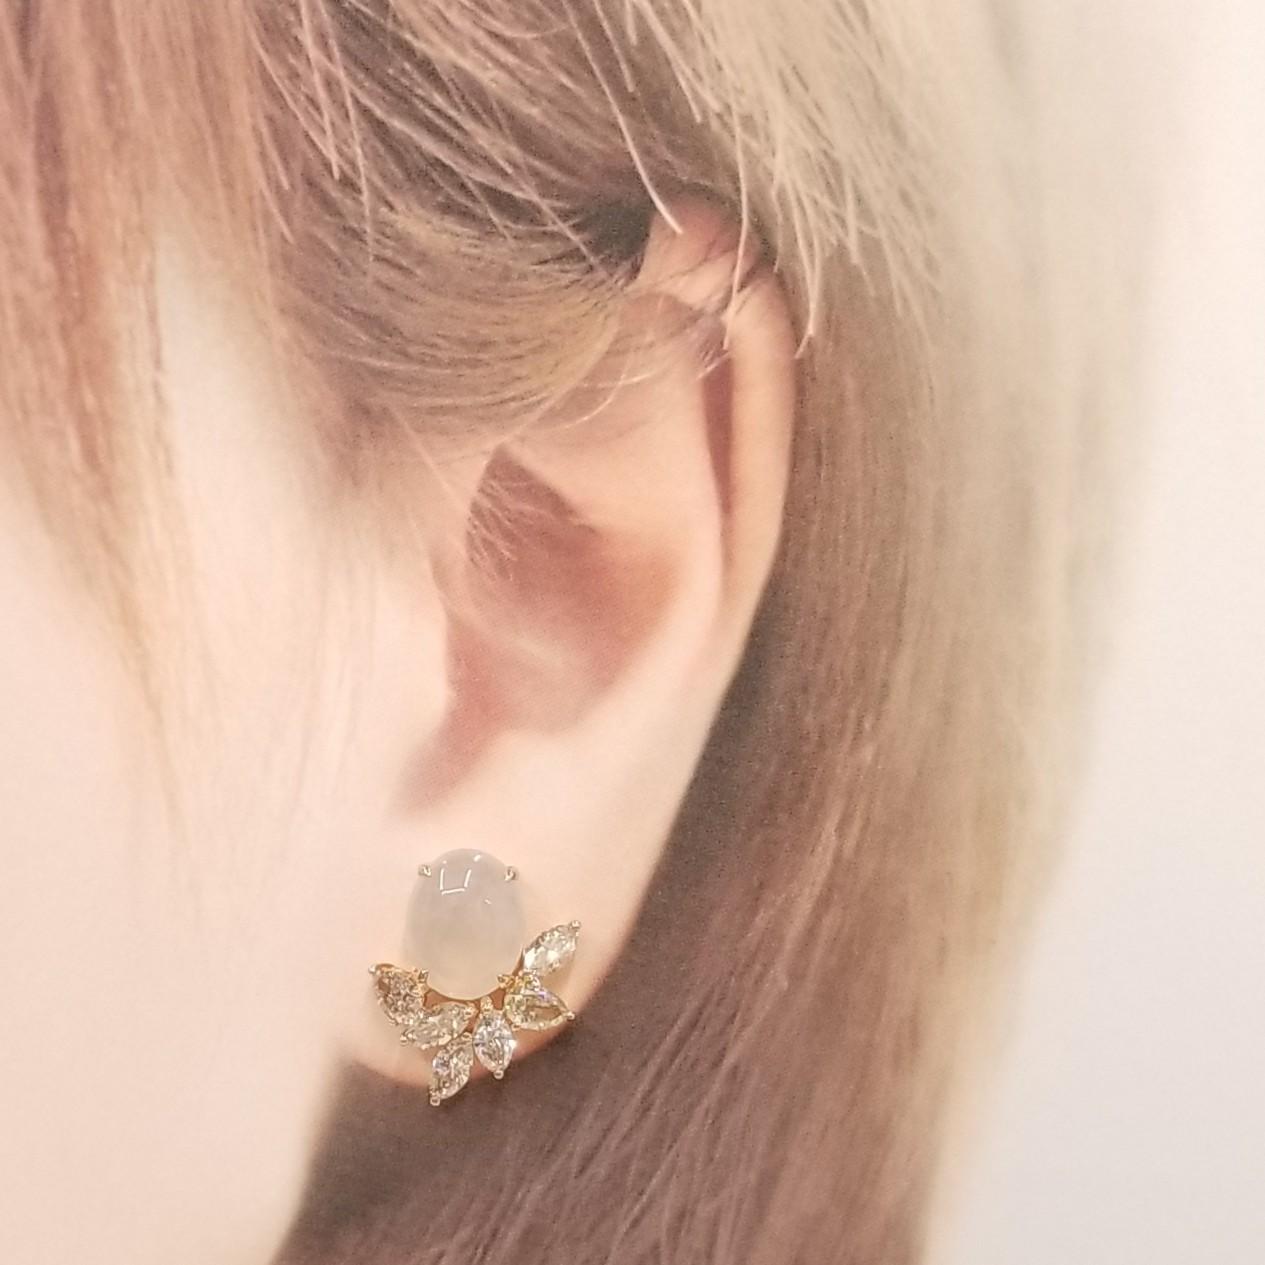 Modern Certified 2.12 Carat Diamond & White Jade (Fei Cui) Earrings in 18K Rose Gold For Sale